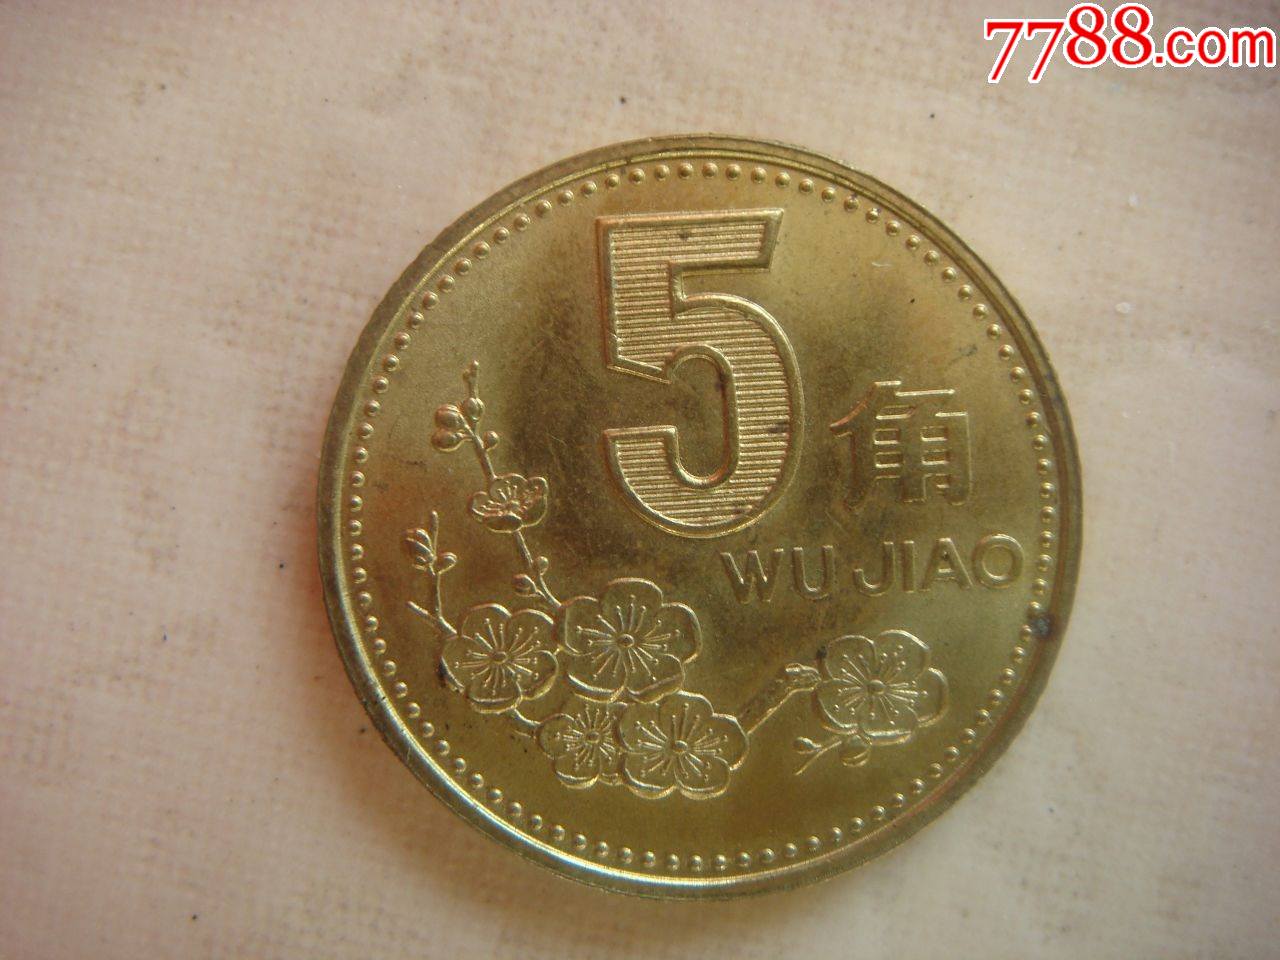 1997年5角梅花币